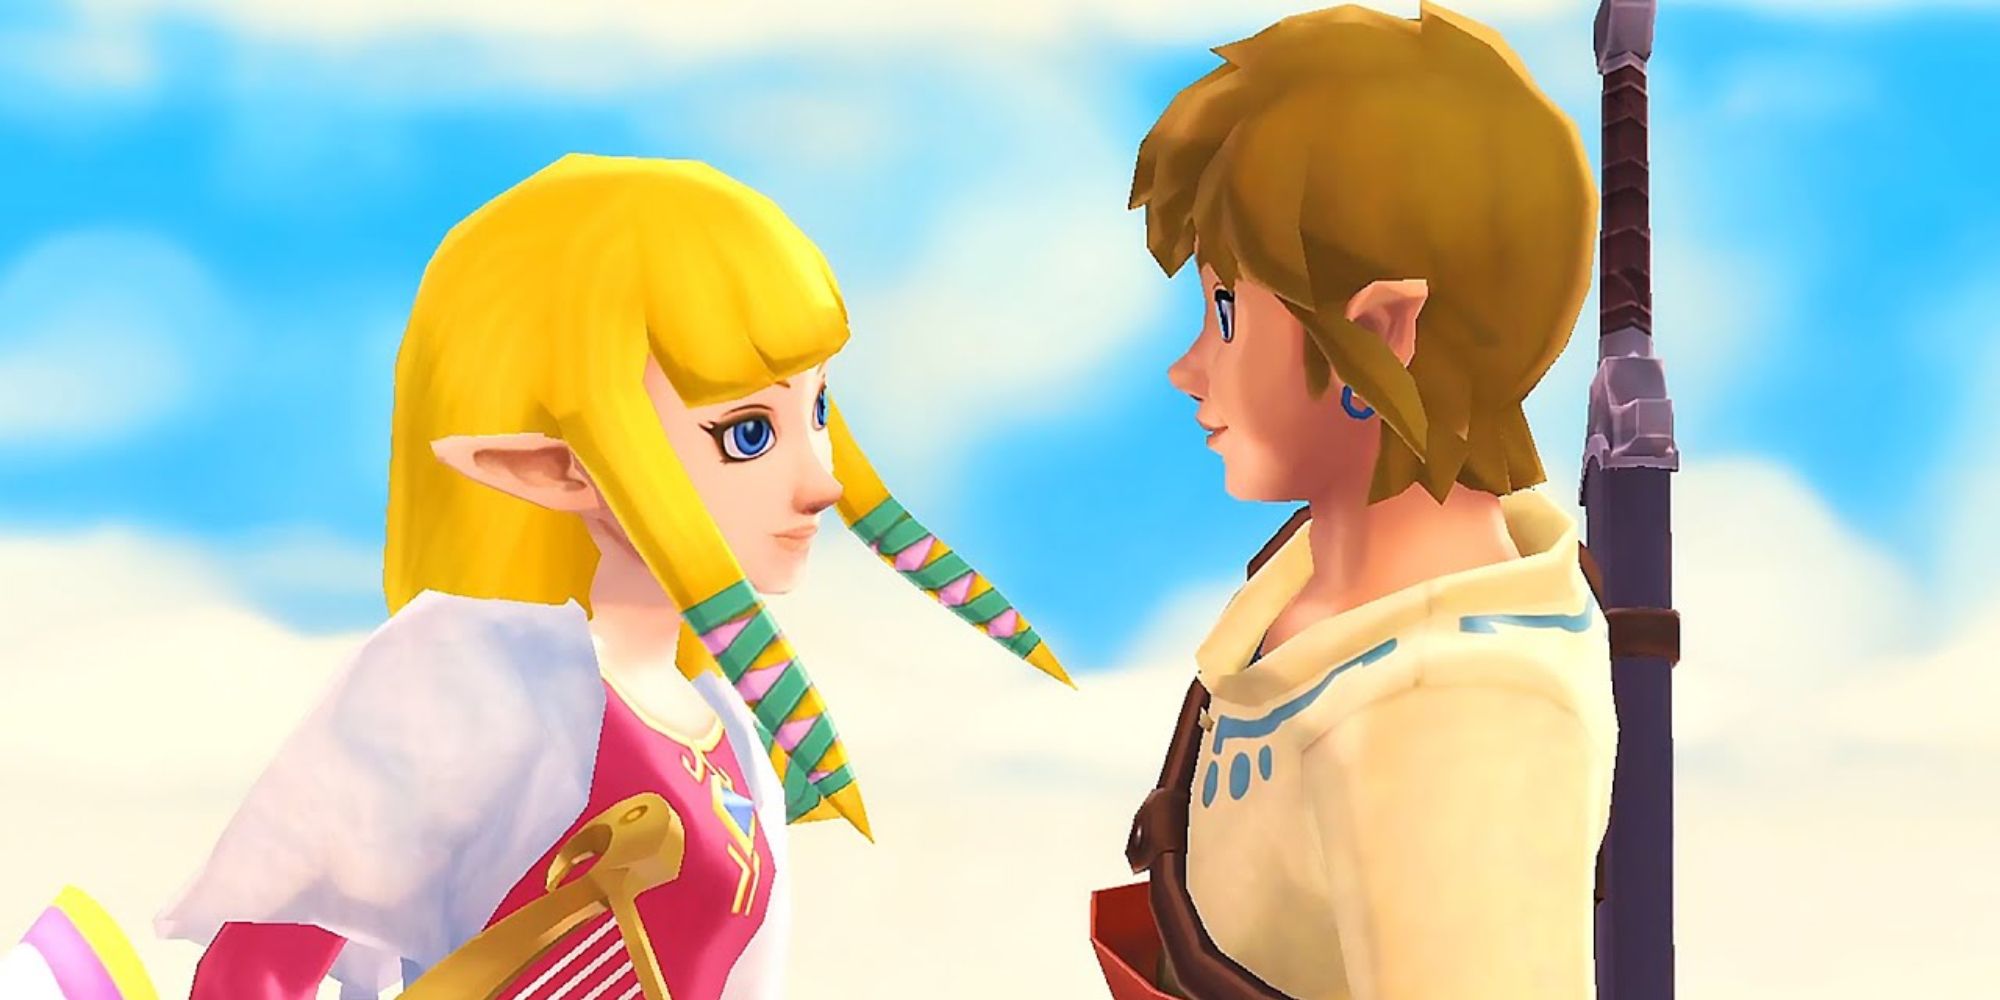 Zelda and Link talking in Skyward Sword